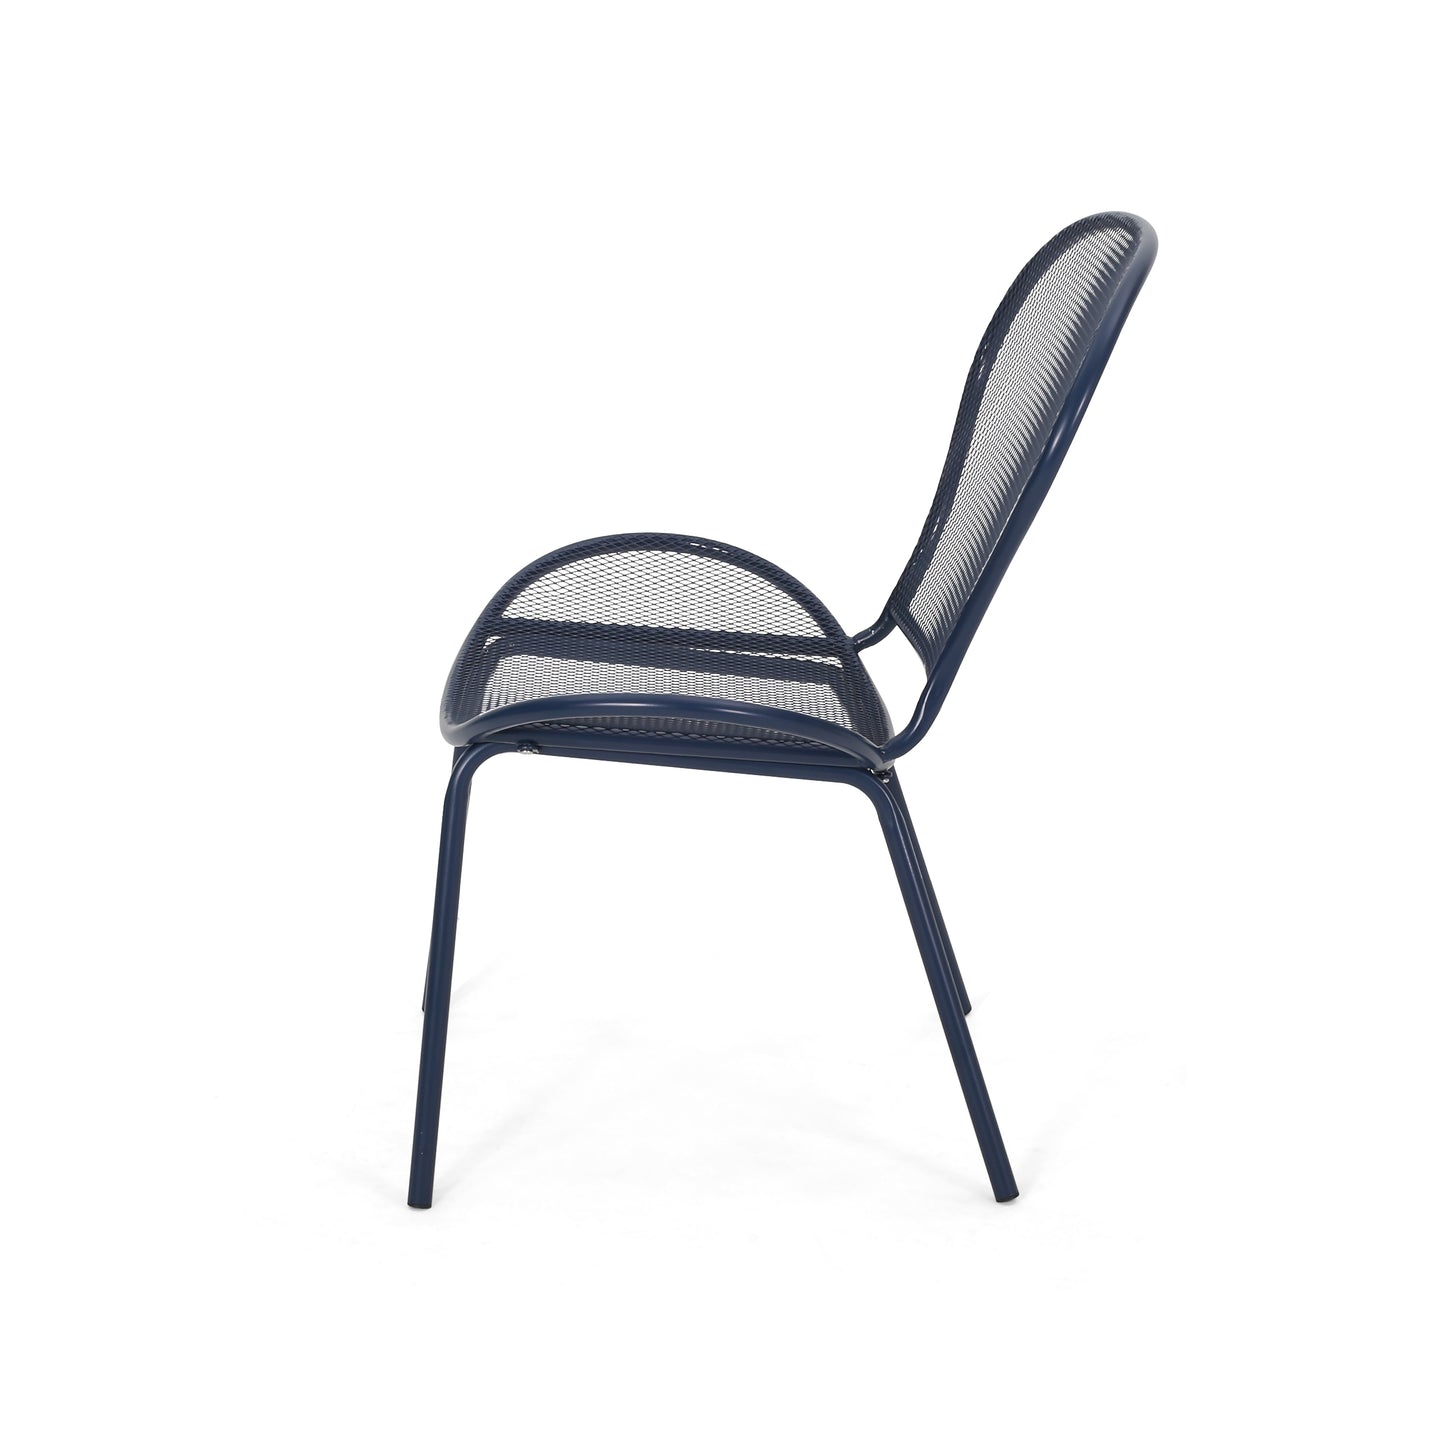 Tristian Modern Outdoor Iron Club Chair (Set of 2)